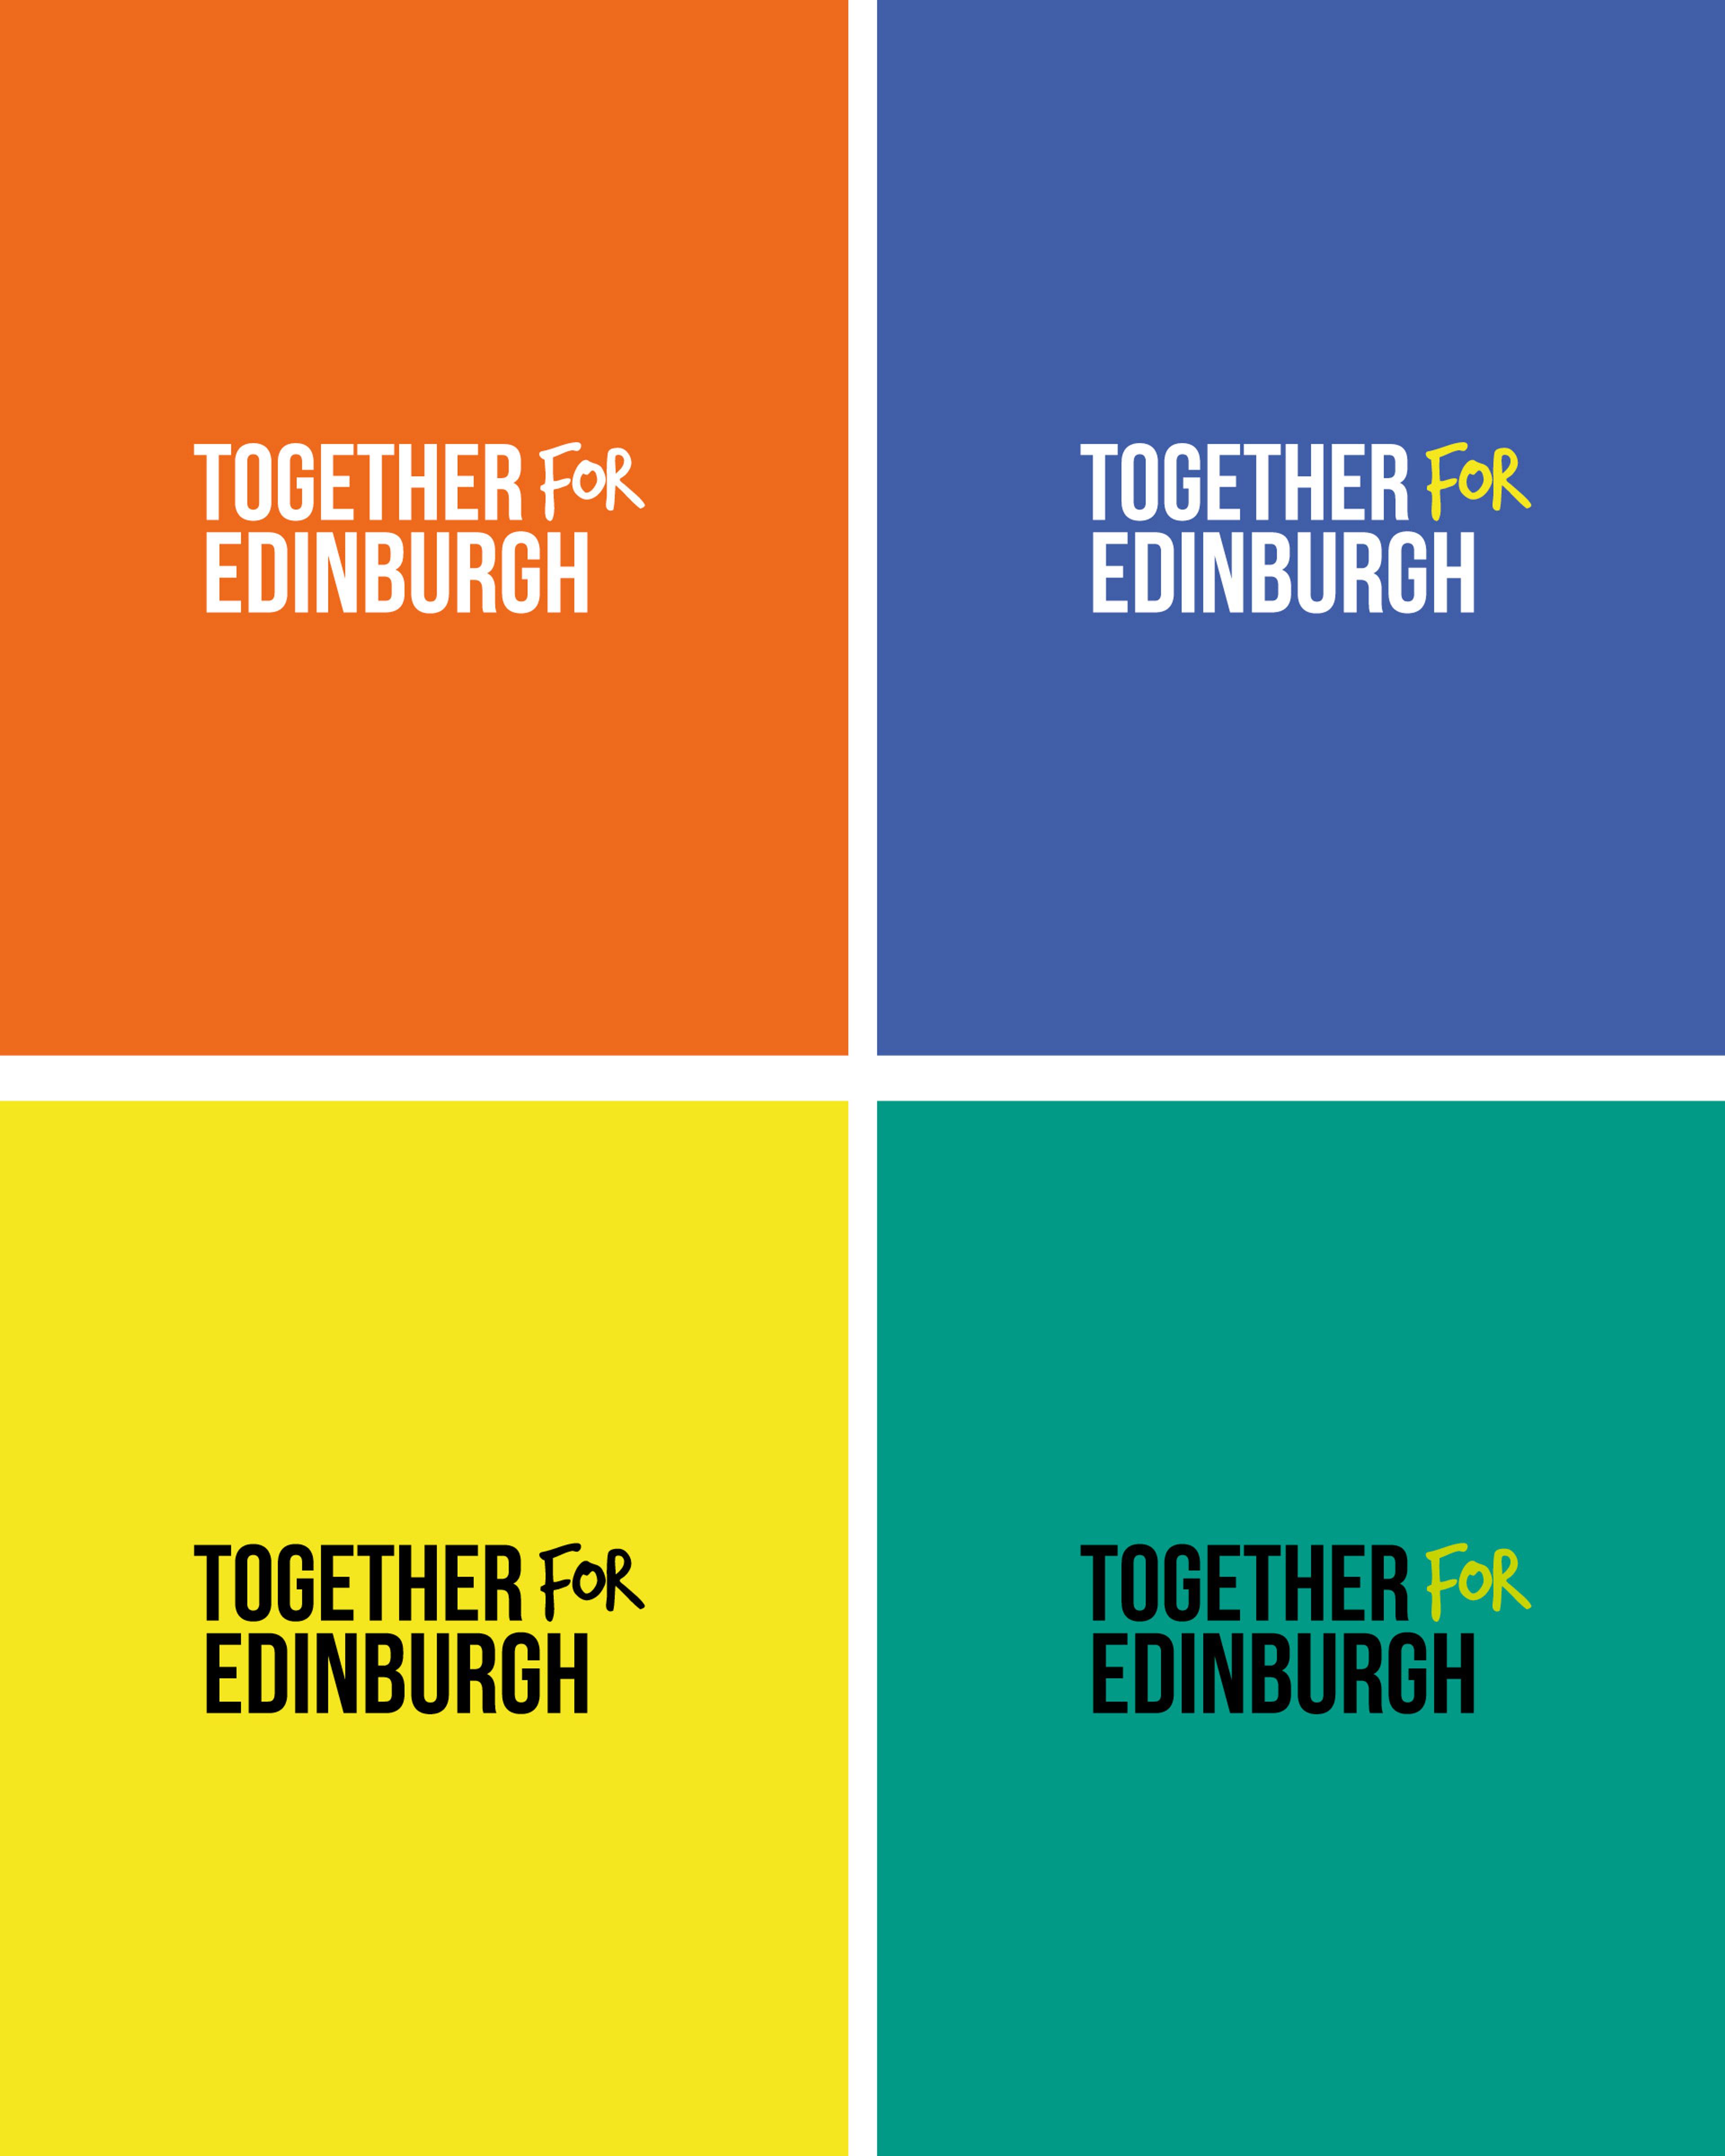 Together for Edinburgh branding